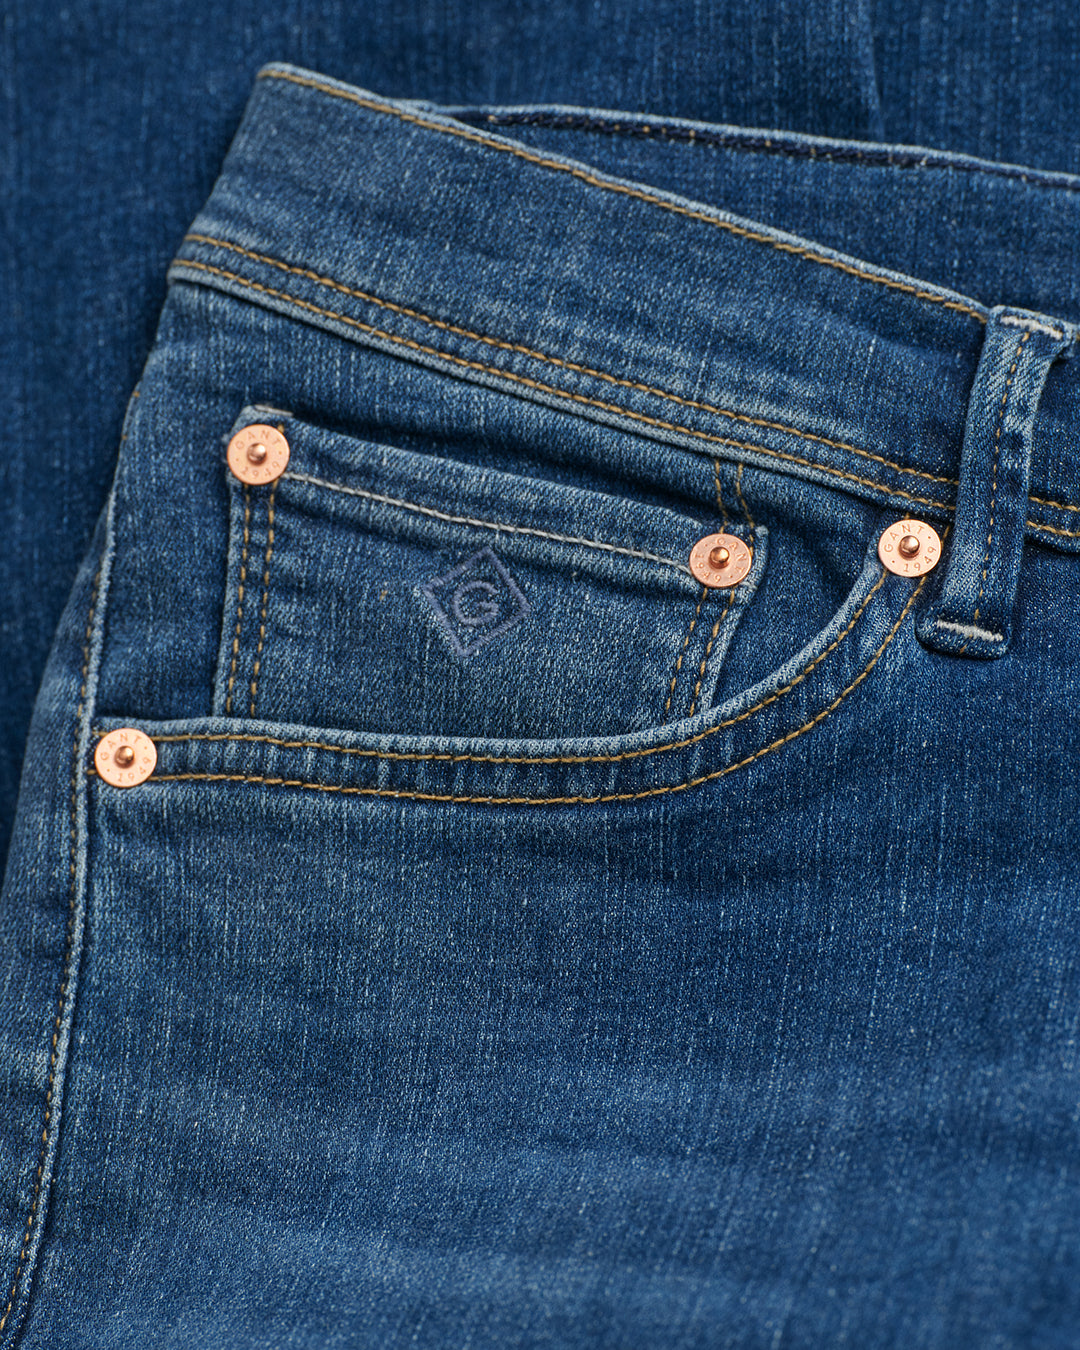 GANT Maxen Active-Recover Jeans/Traperice 1000178 ODRŽIVI PRISTUP